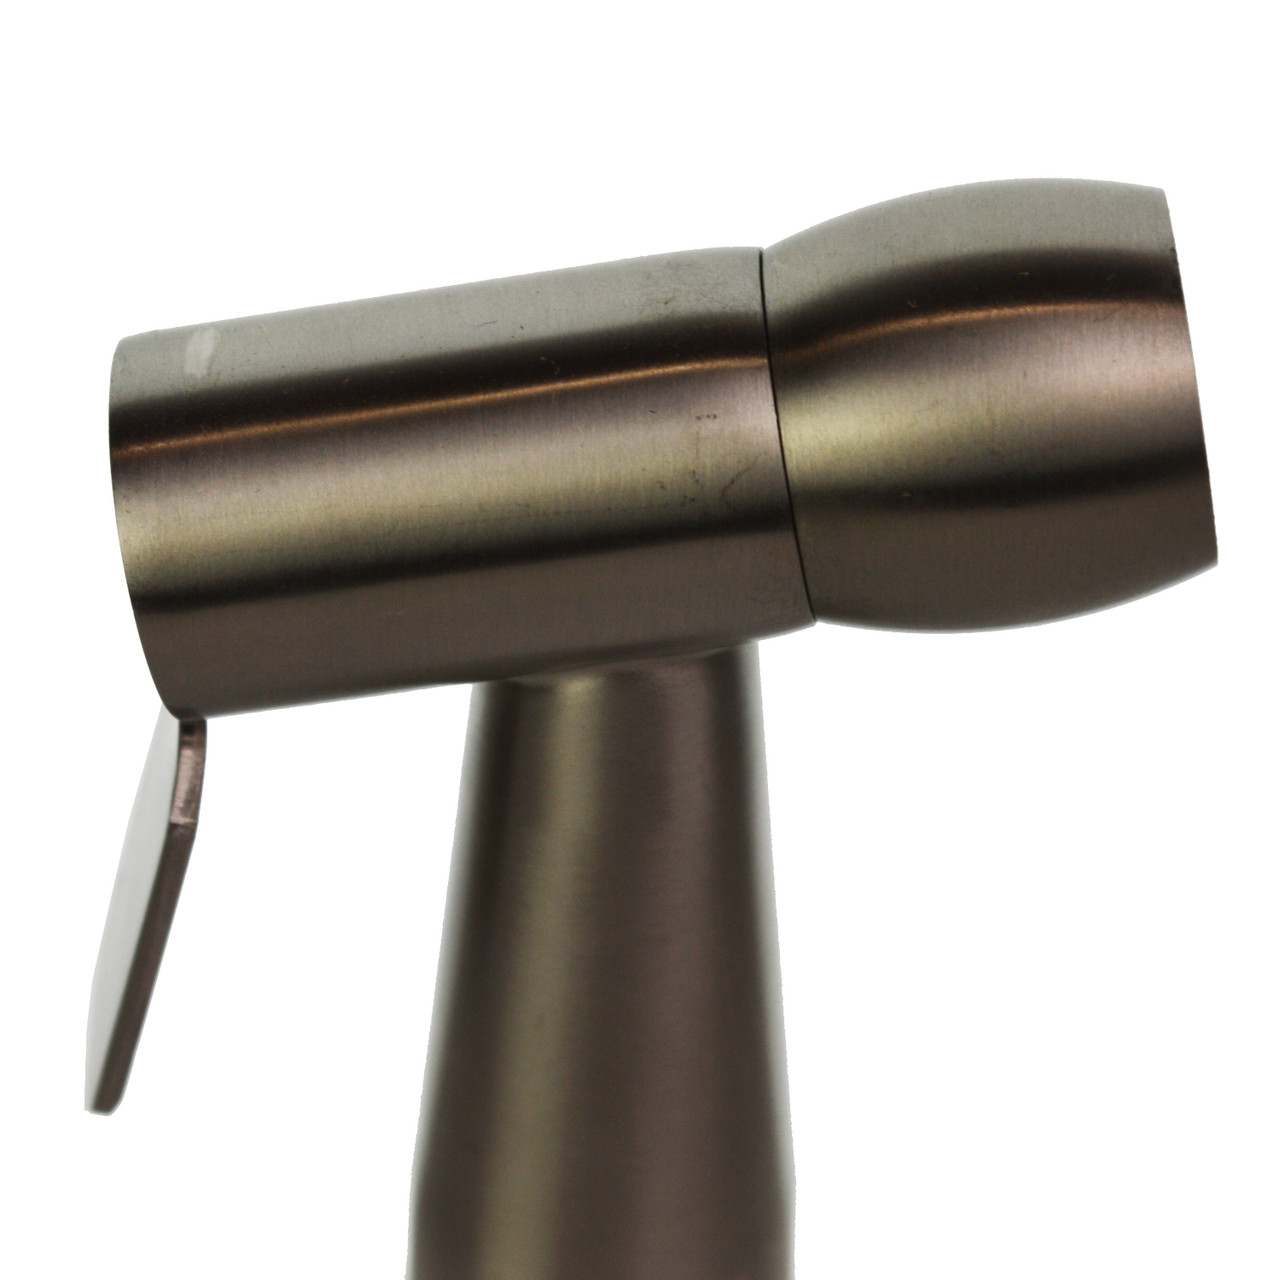 Brushed Nickel Kitchen Faucet Handheld Sprayer product image